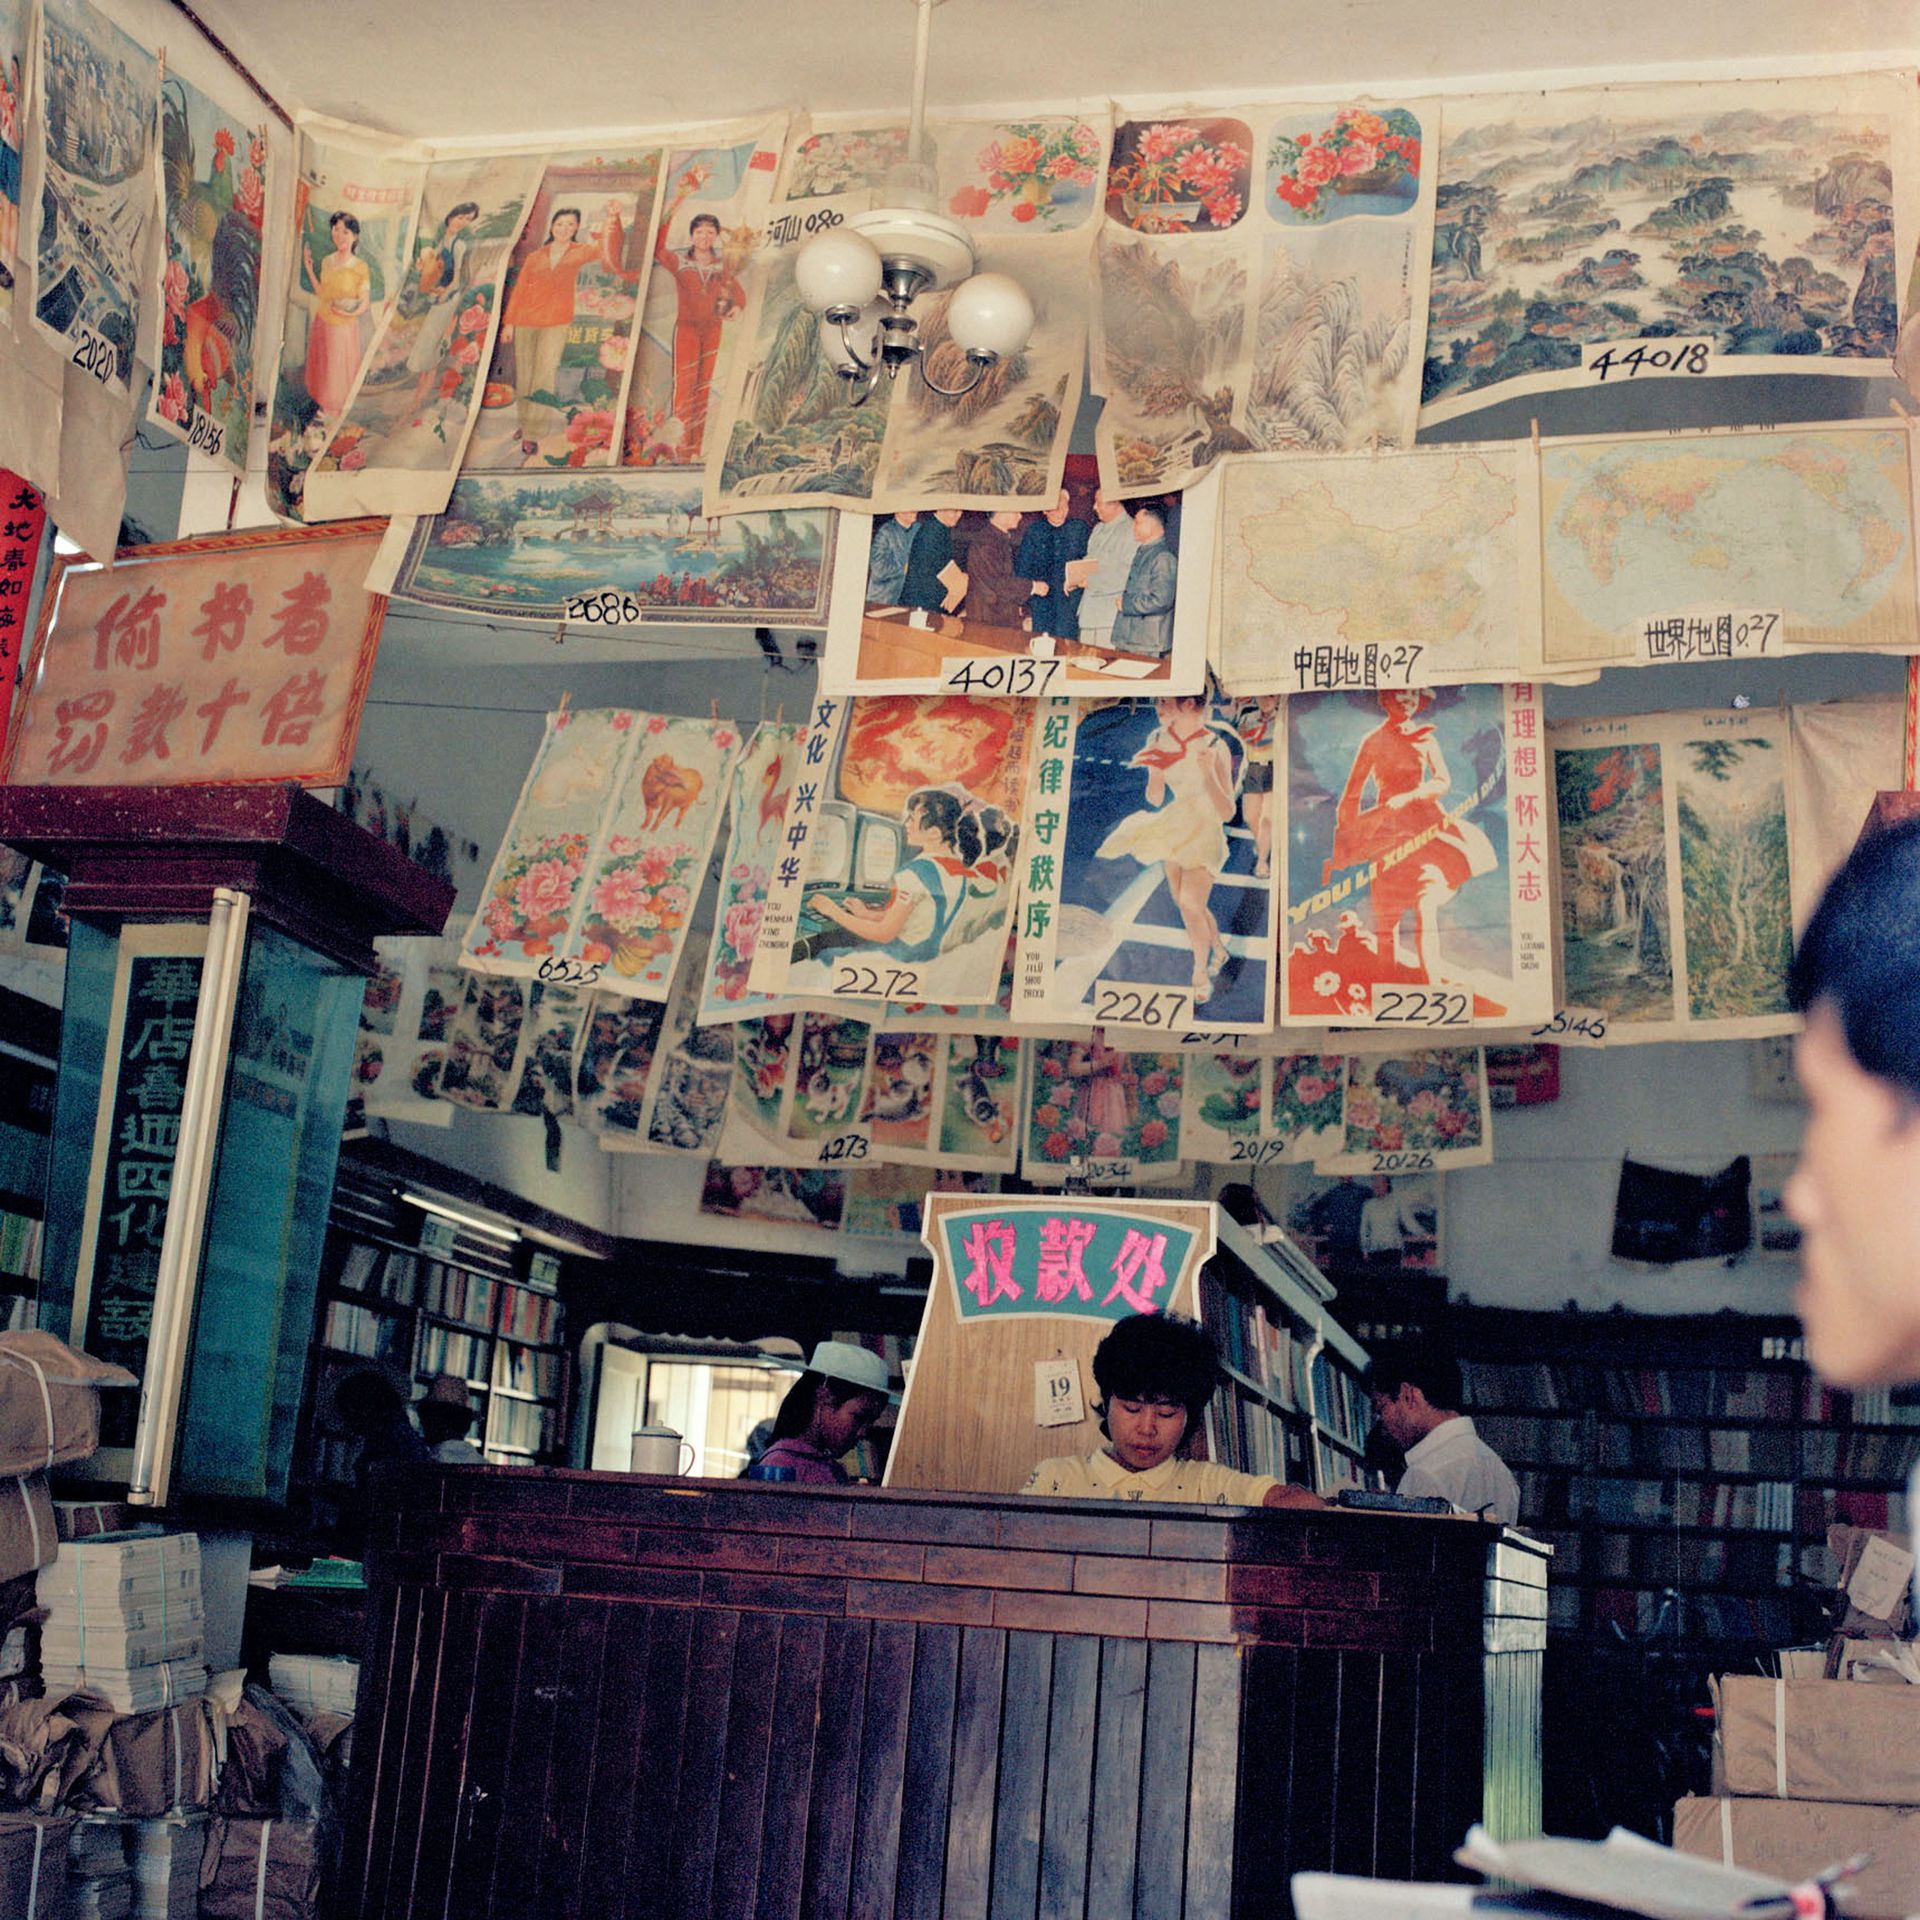 Bookstore, Shenzhen, 1980’s